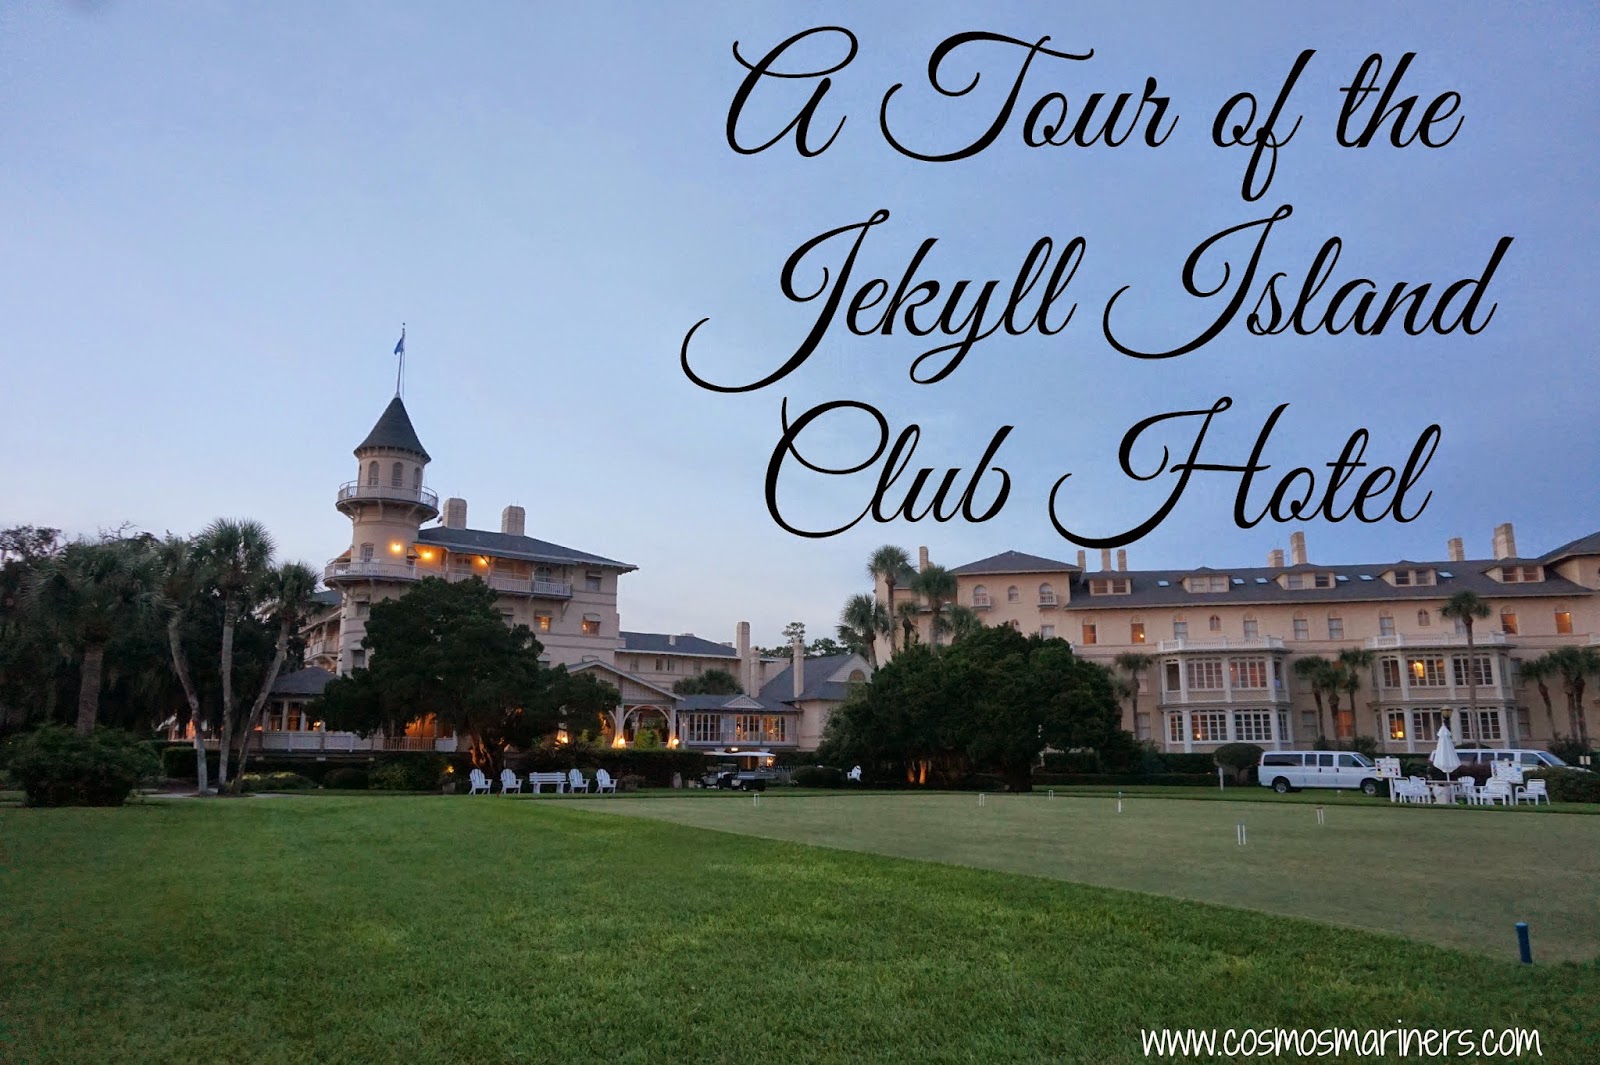 Jekyll Island Club Hotel: A Tour